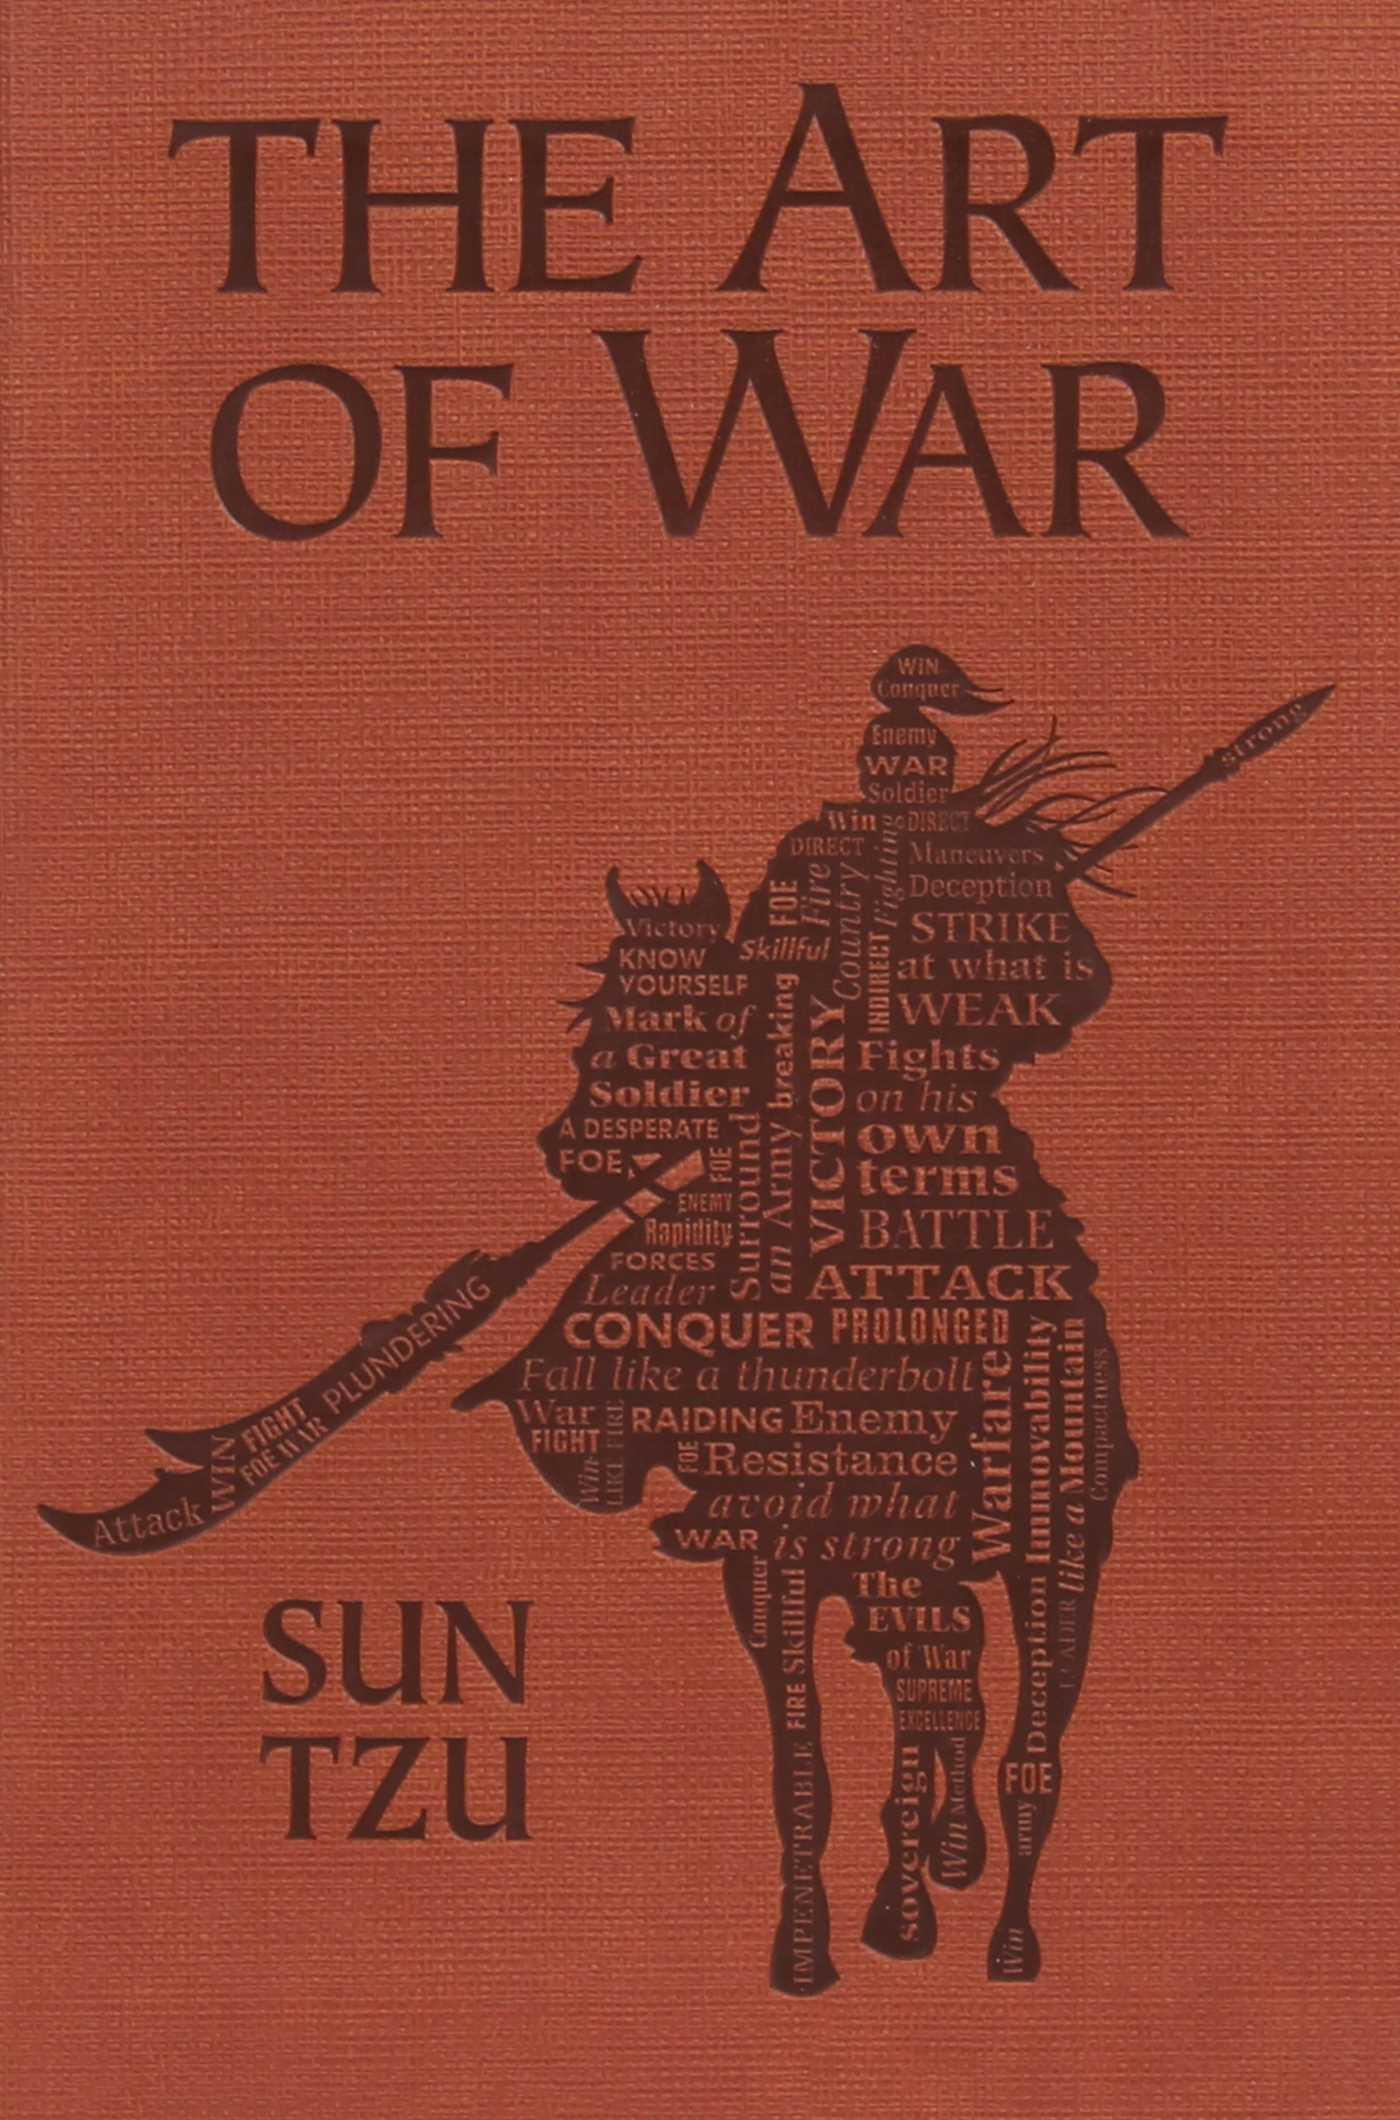 The Art of War audiobook: Sun Tzu's Military Method